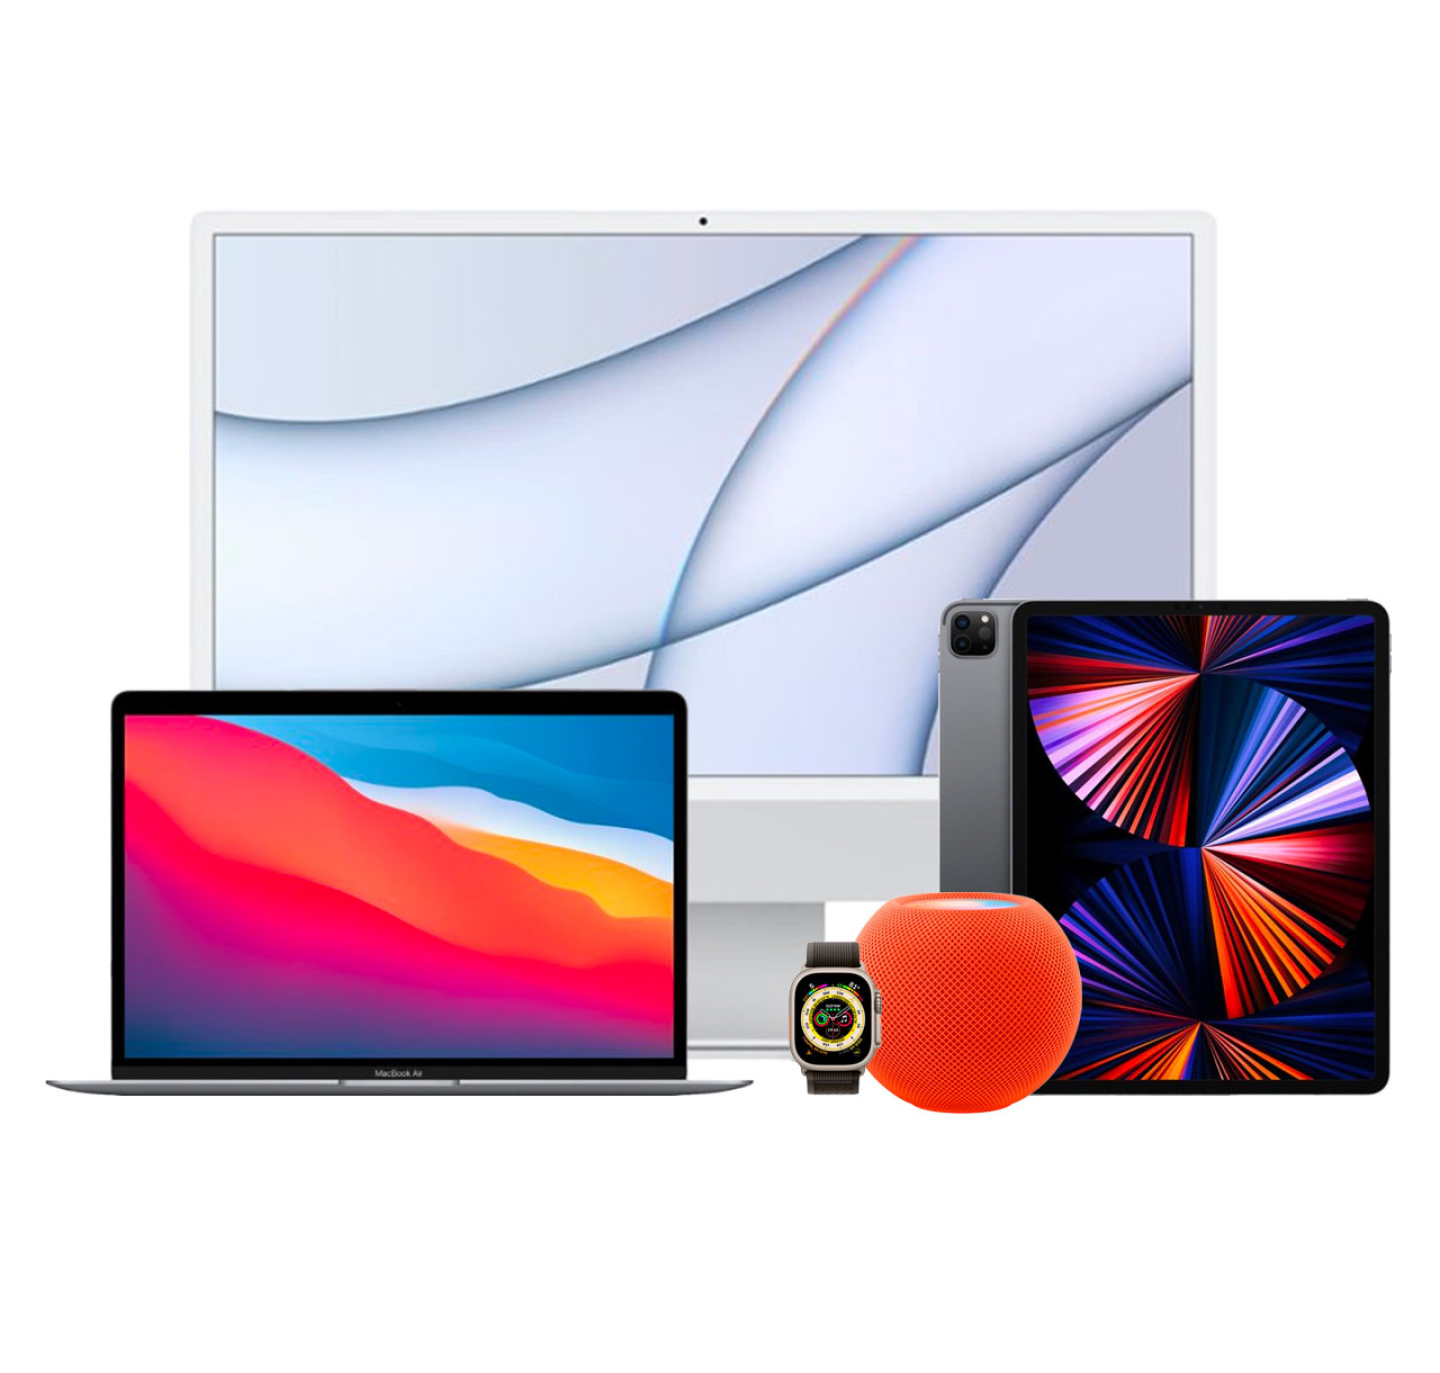 iMac, Macbook laptop, iPad, Apple Watch, HomePod